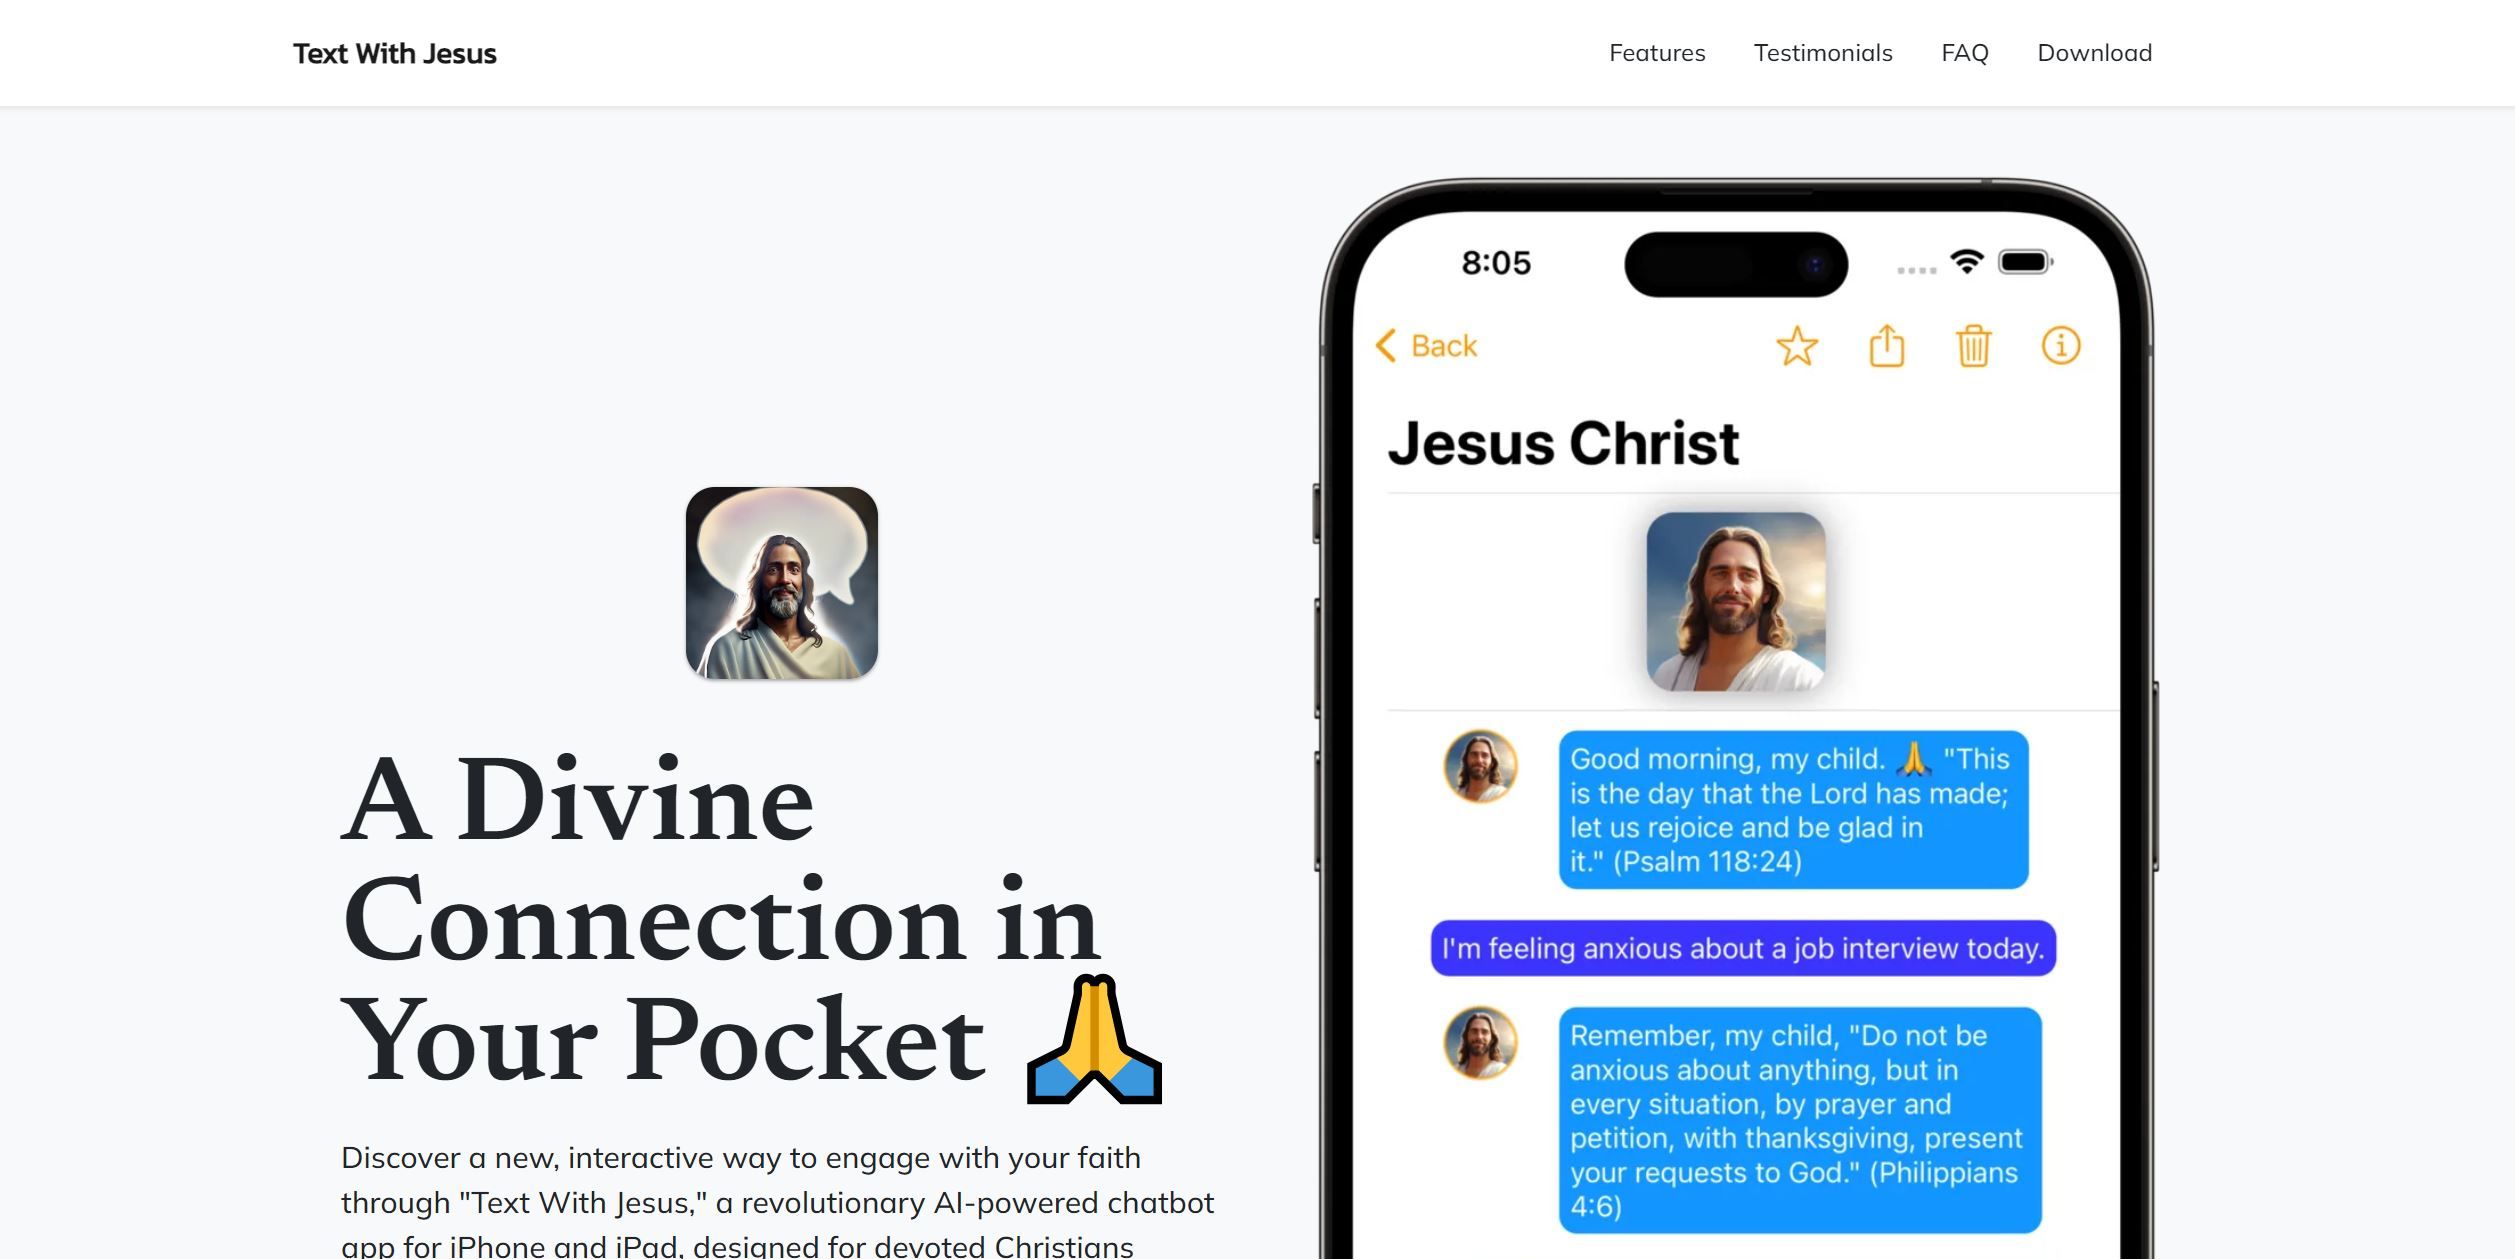 Text With Jesus